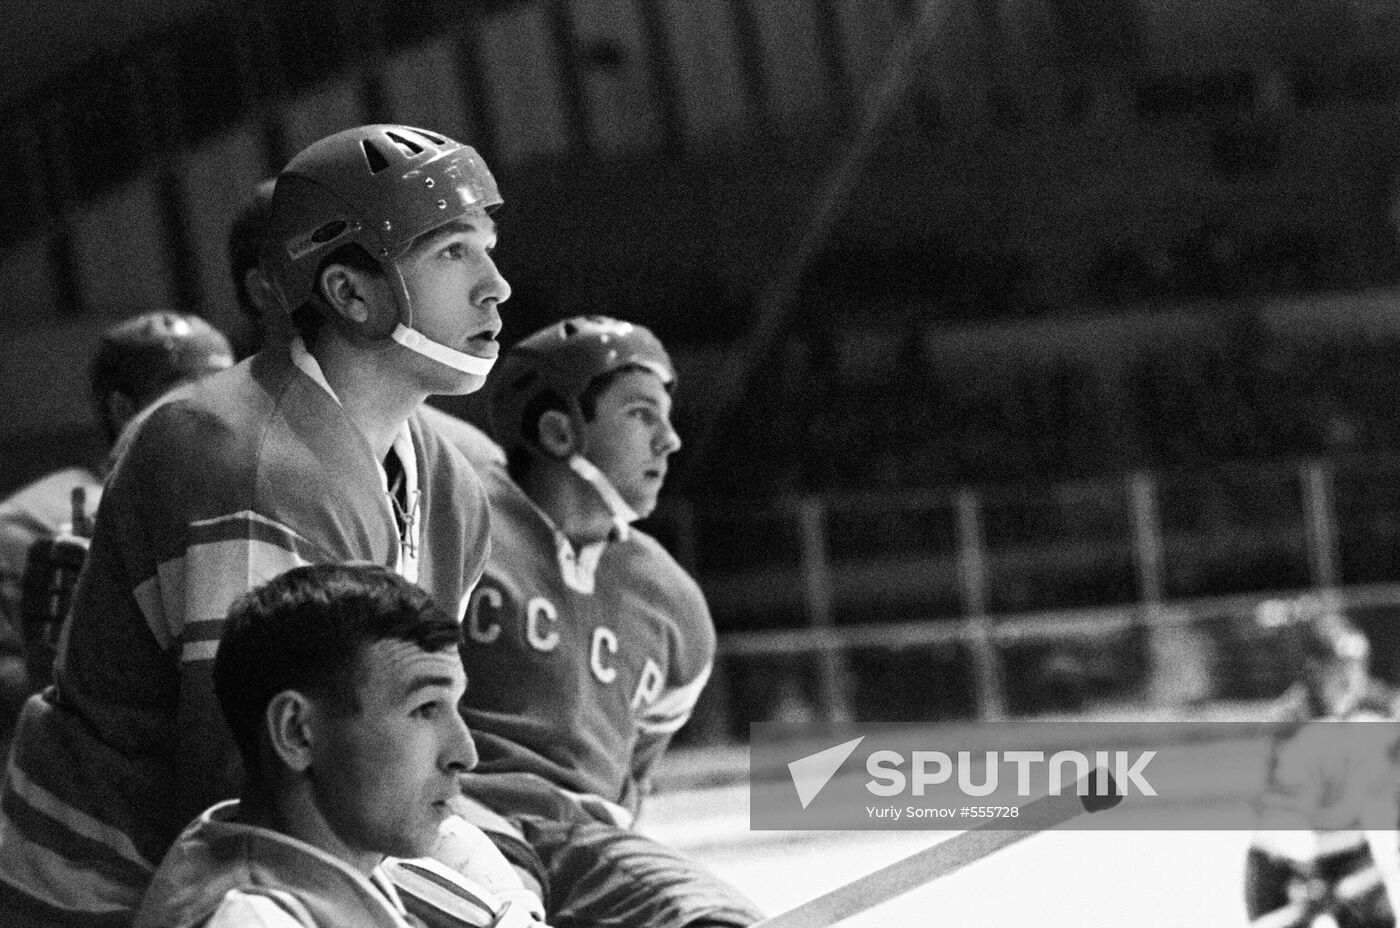 Soviet hockey players